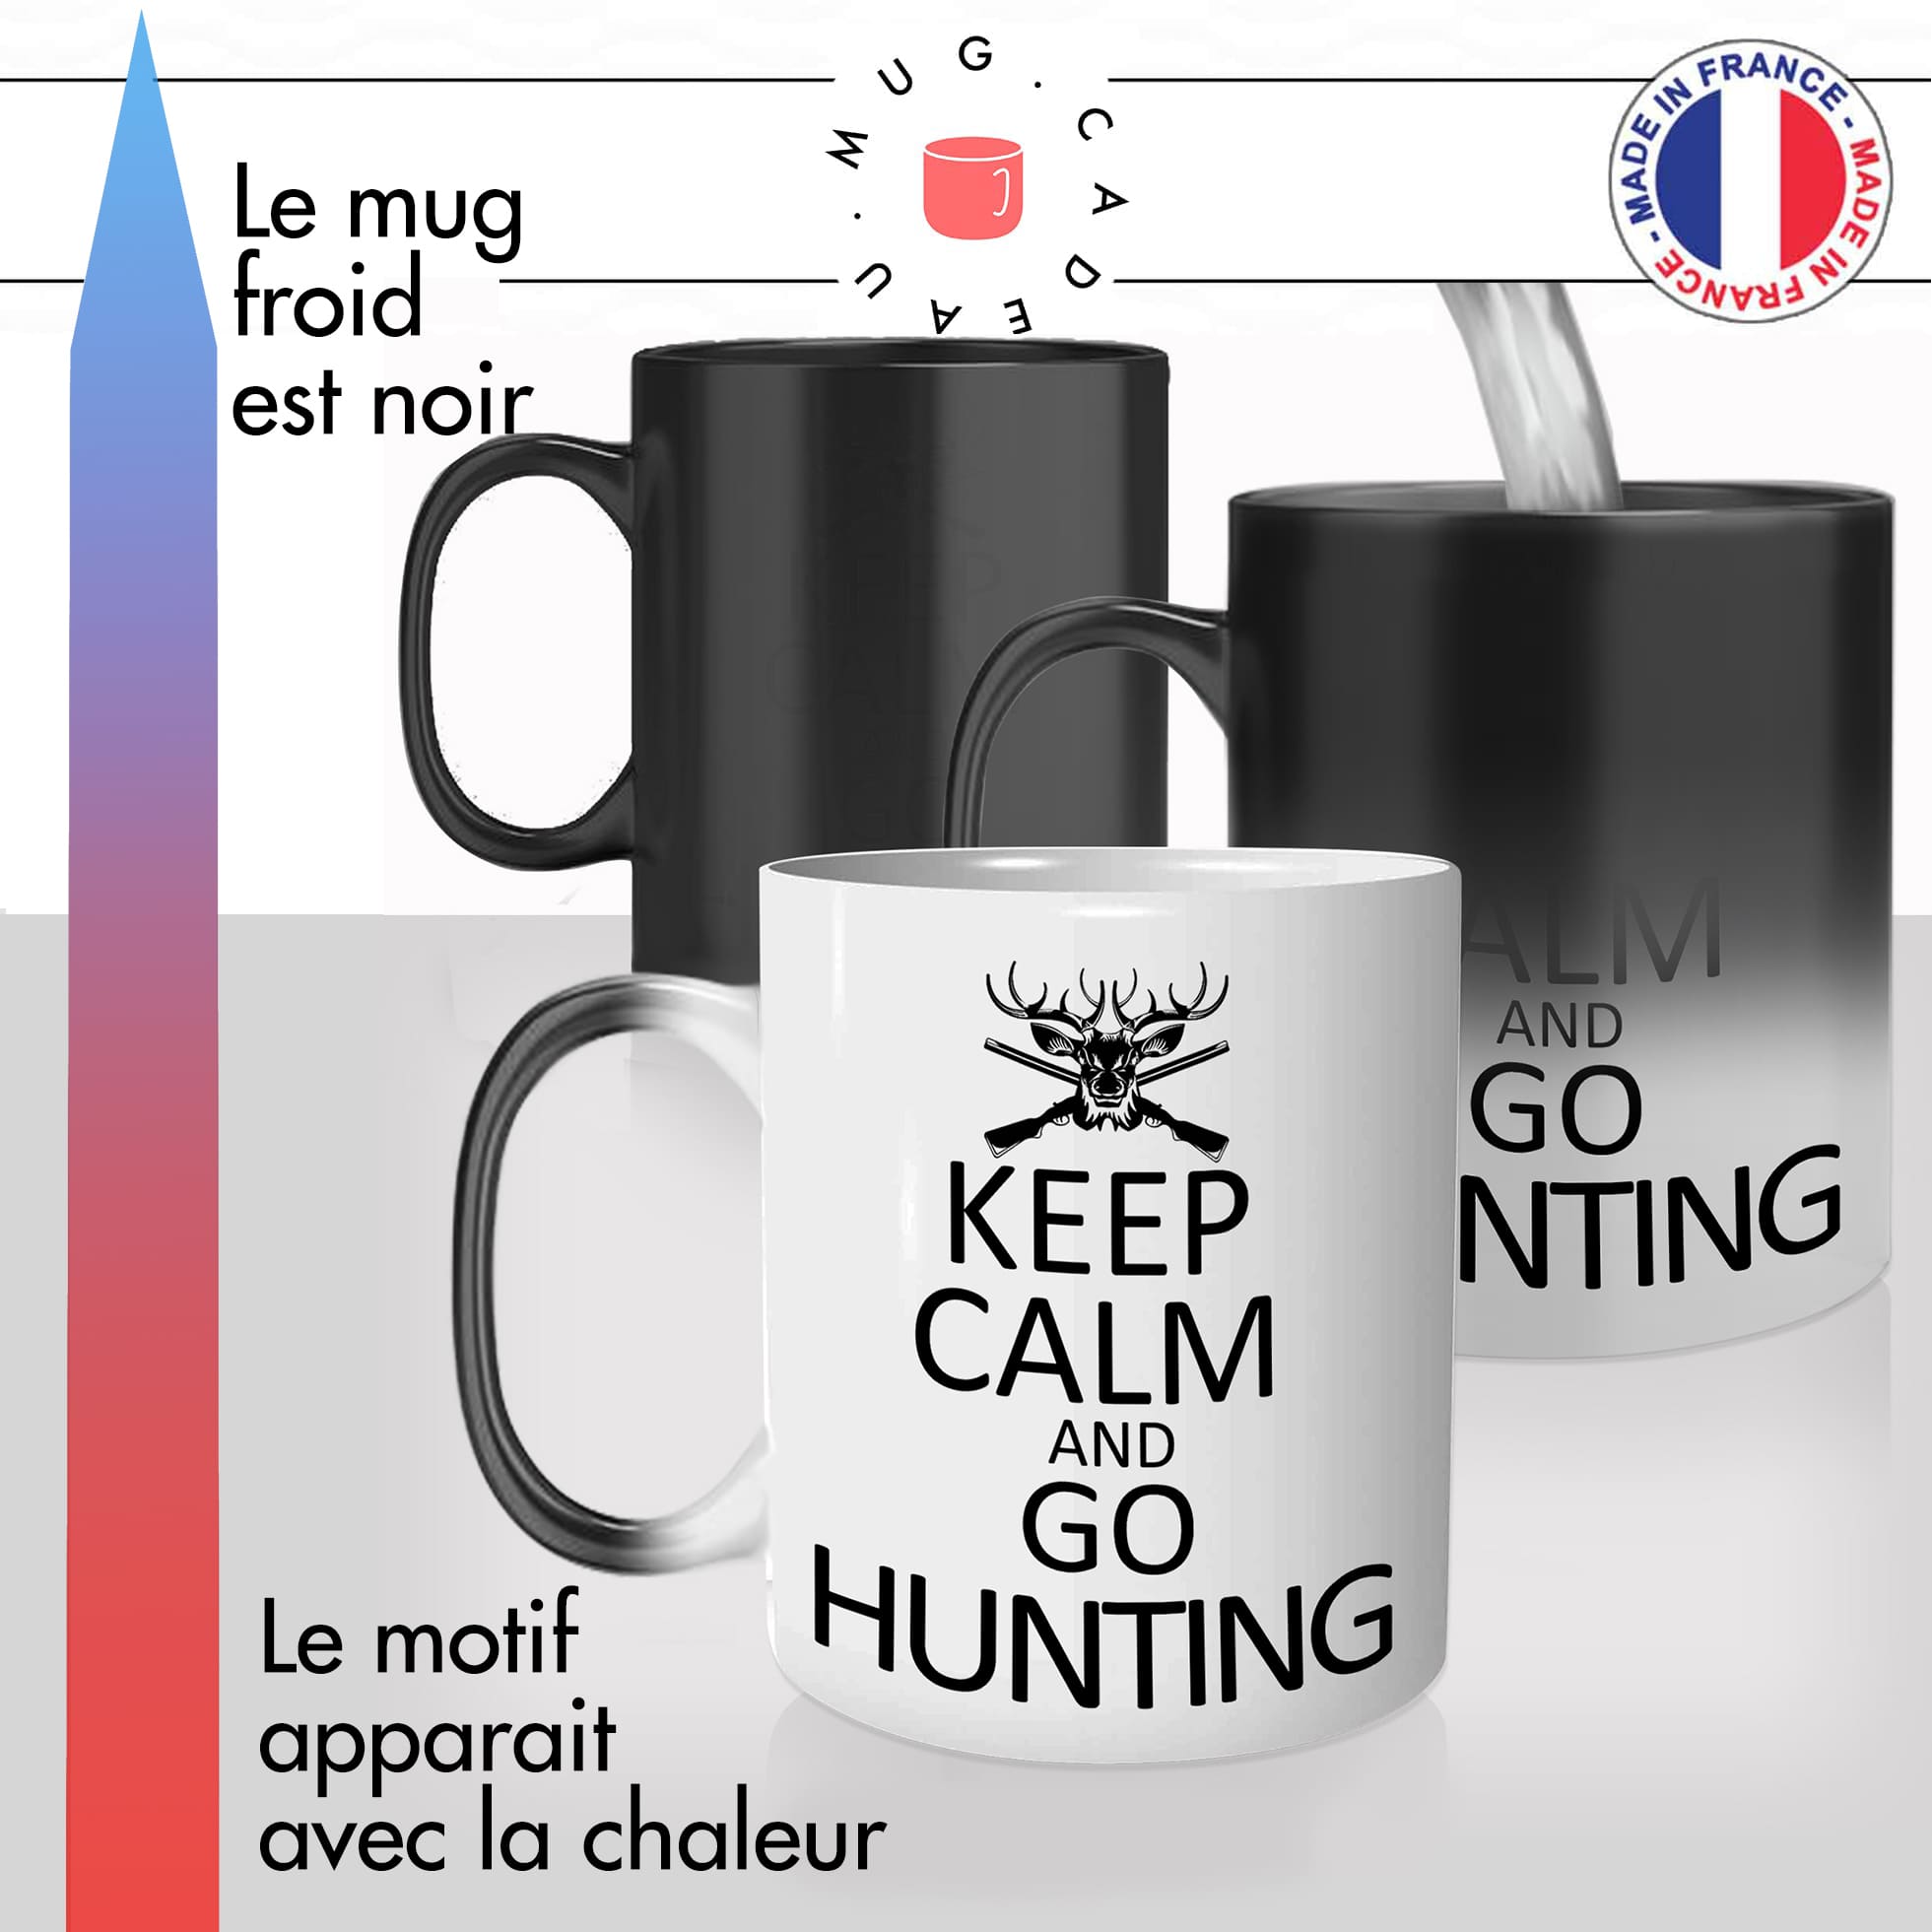 mug magique thermoréactif thermo chauffant personnalisé keep calm go hunting chasse chausseur fusil idée cadeau fun original passion